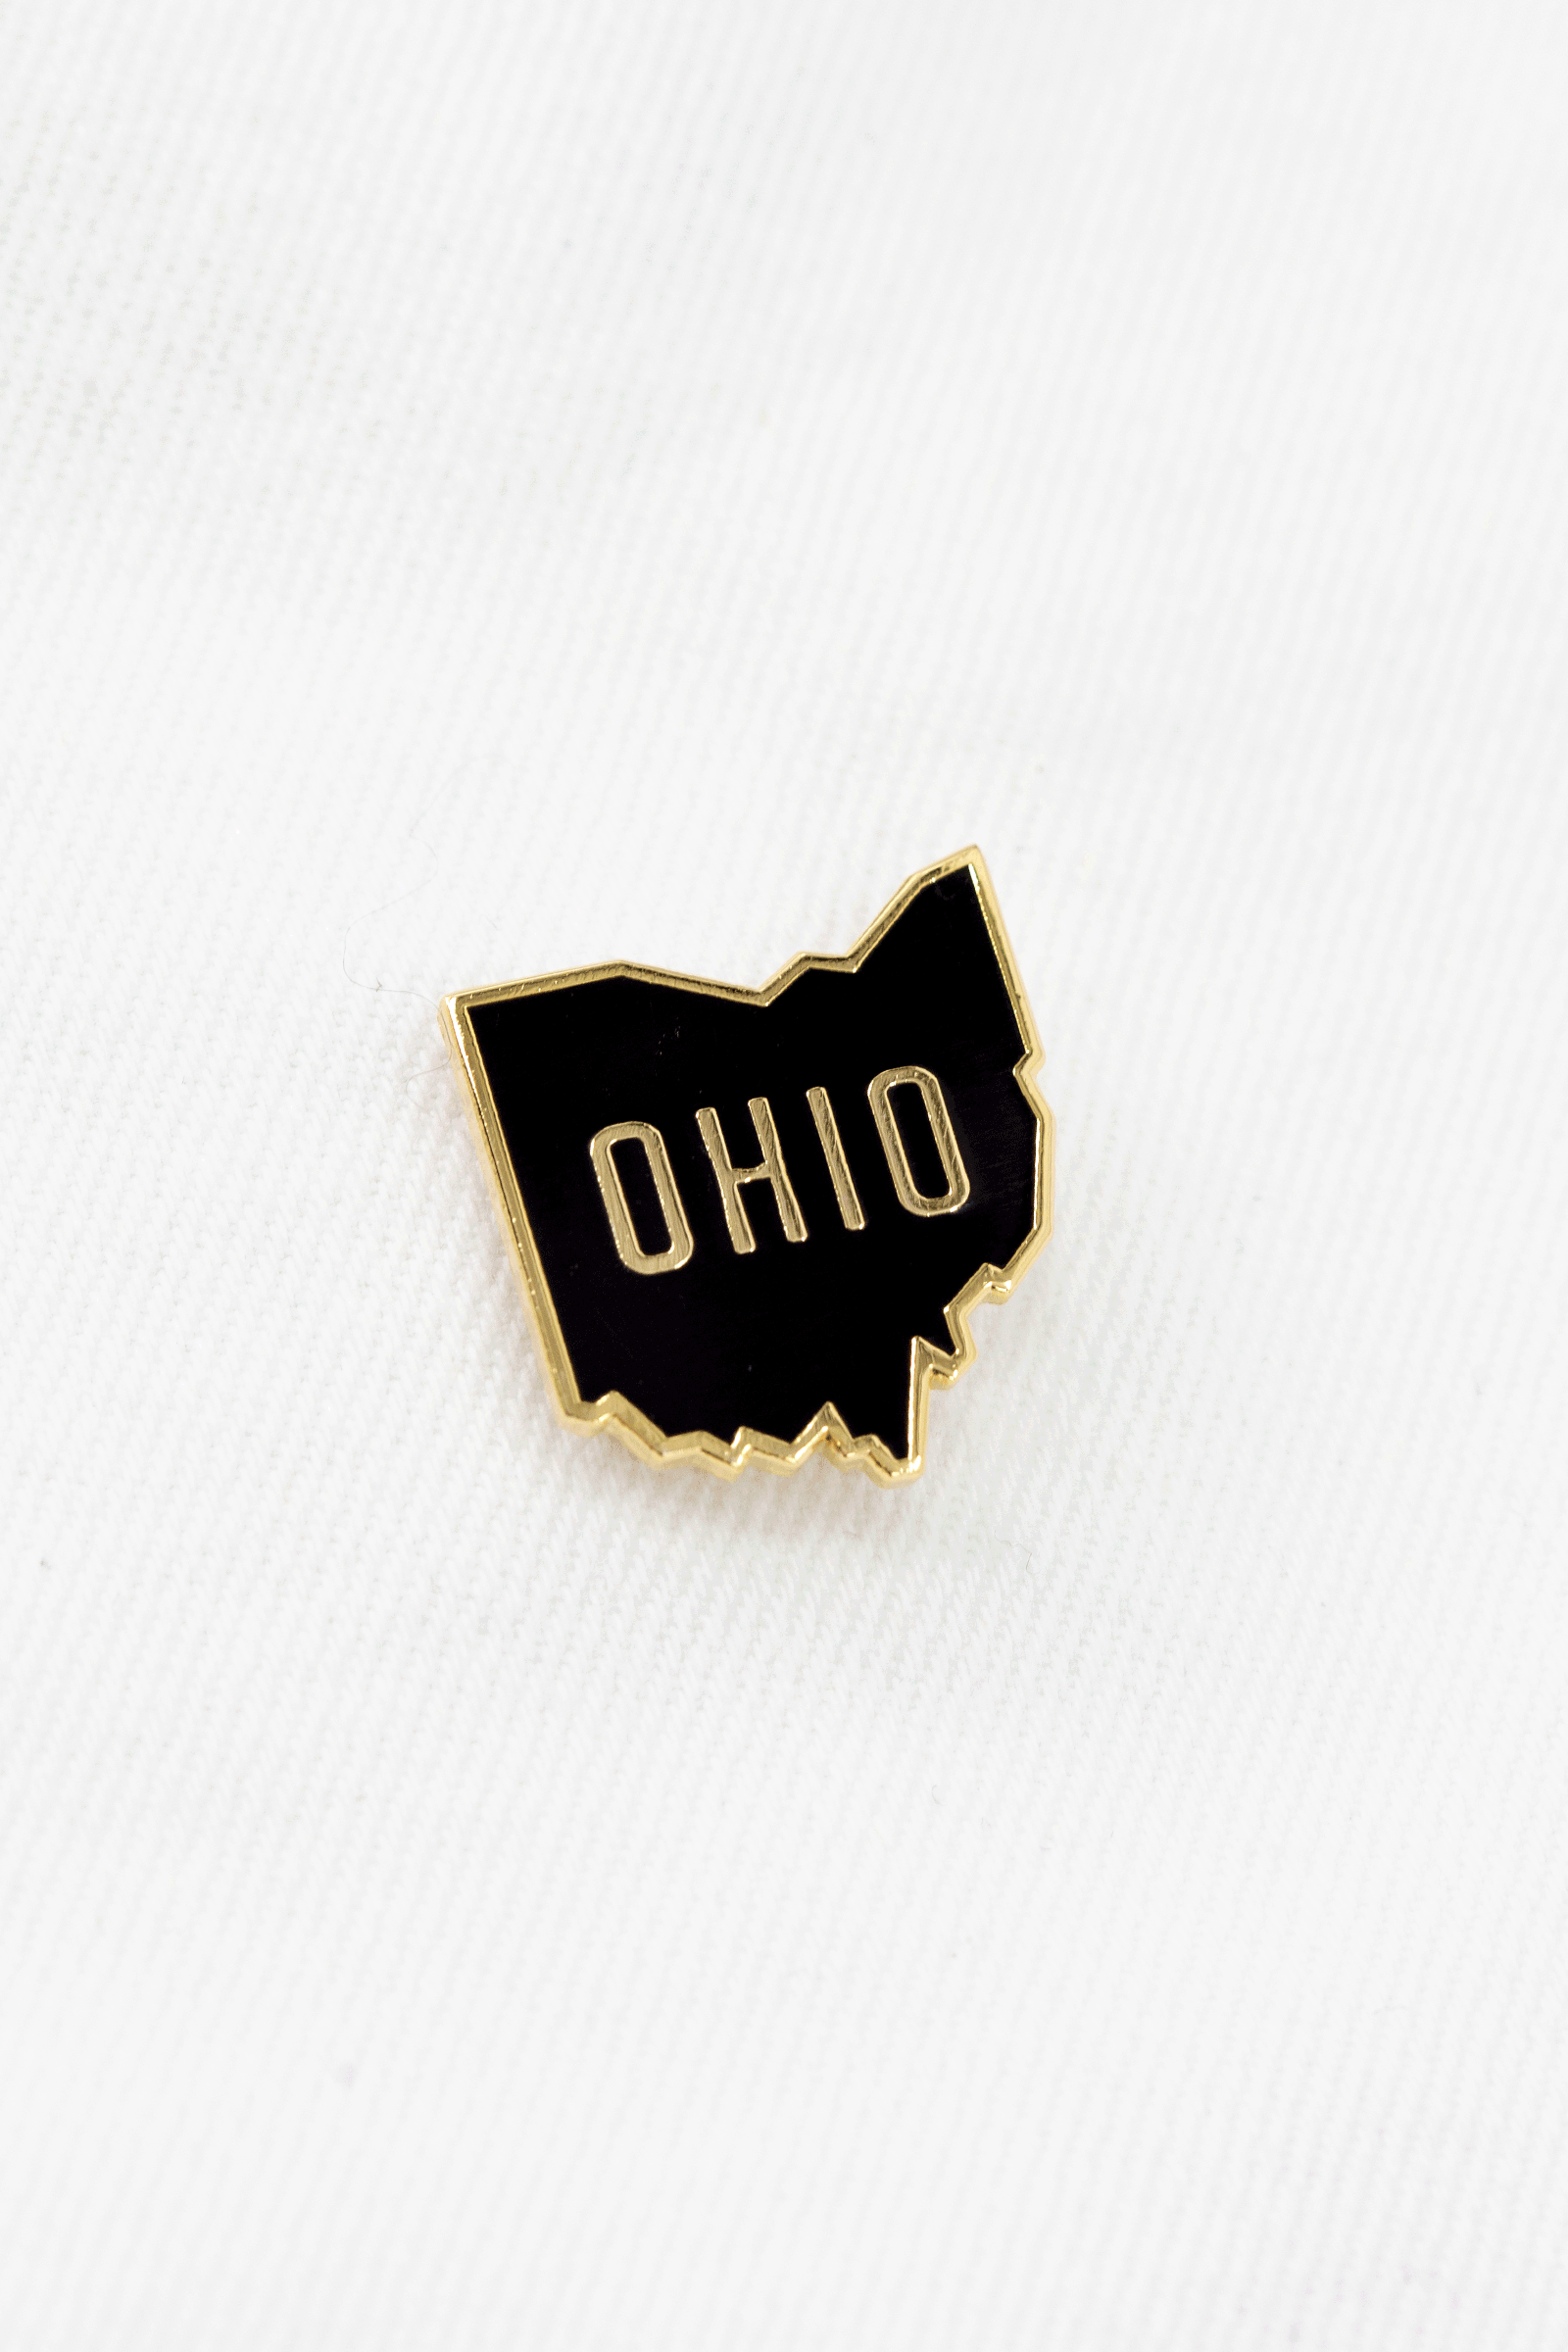 Ohio Pin